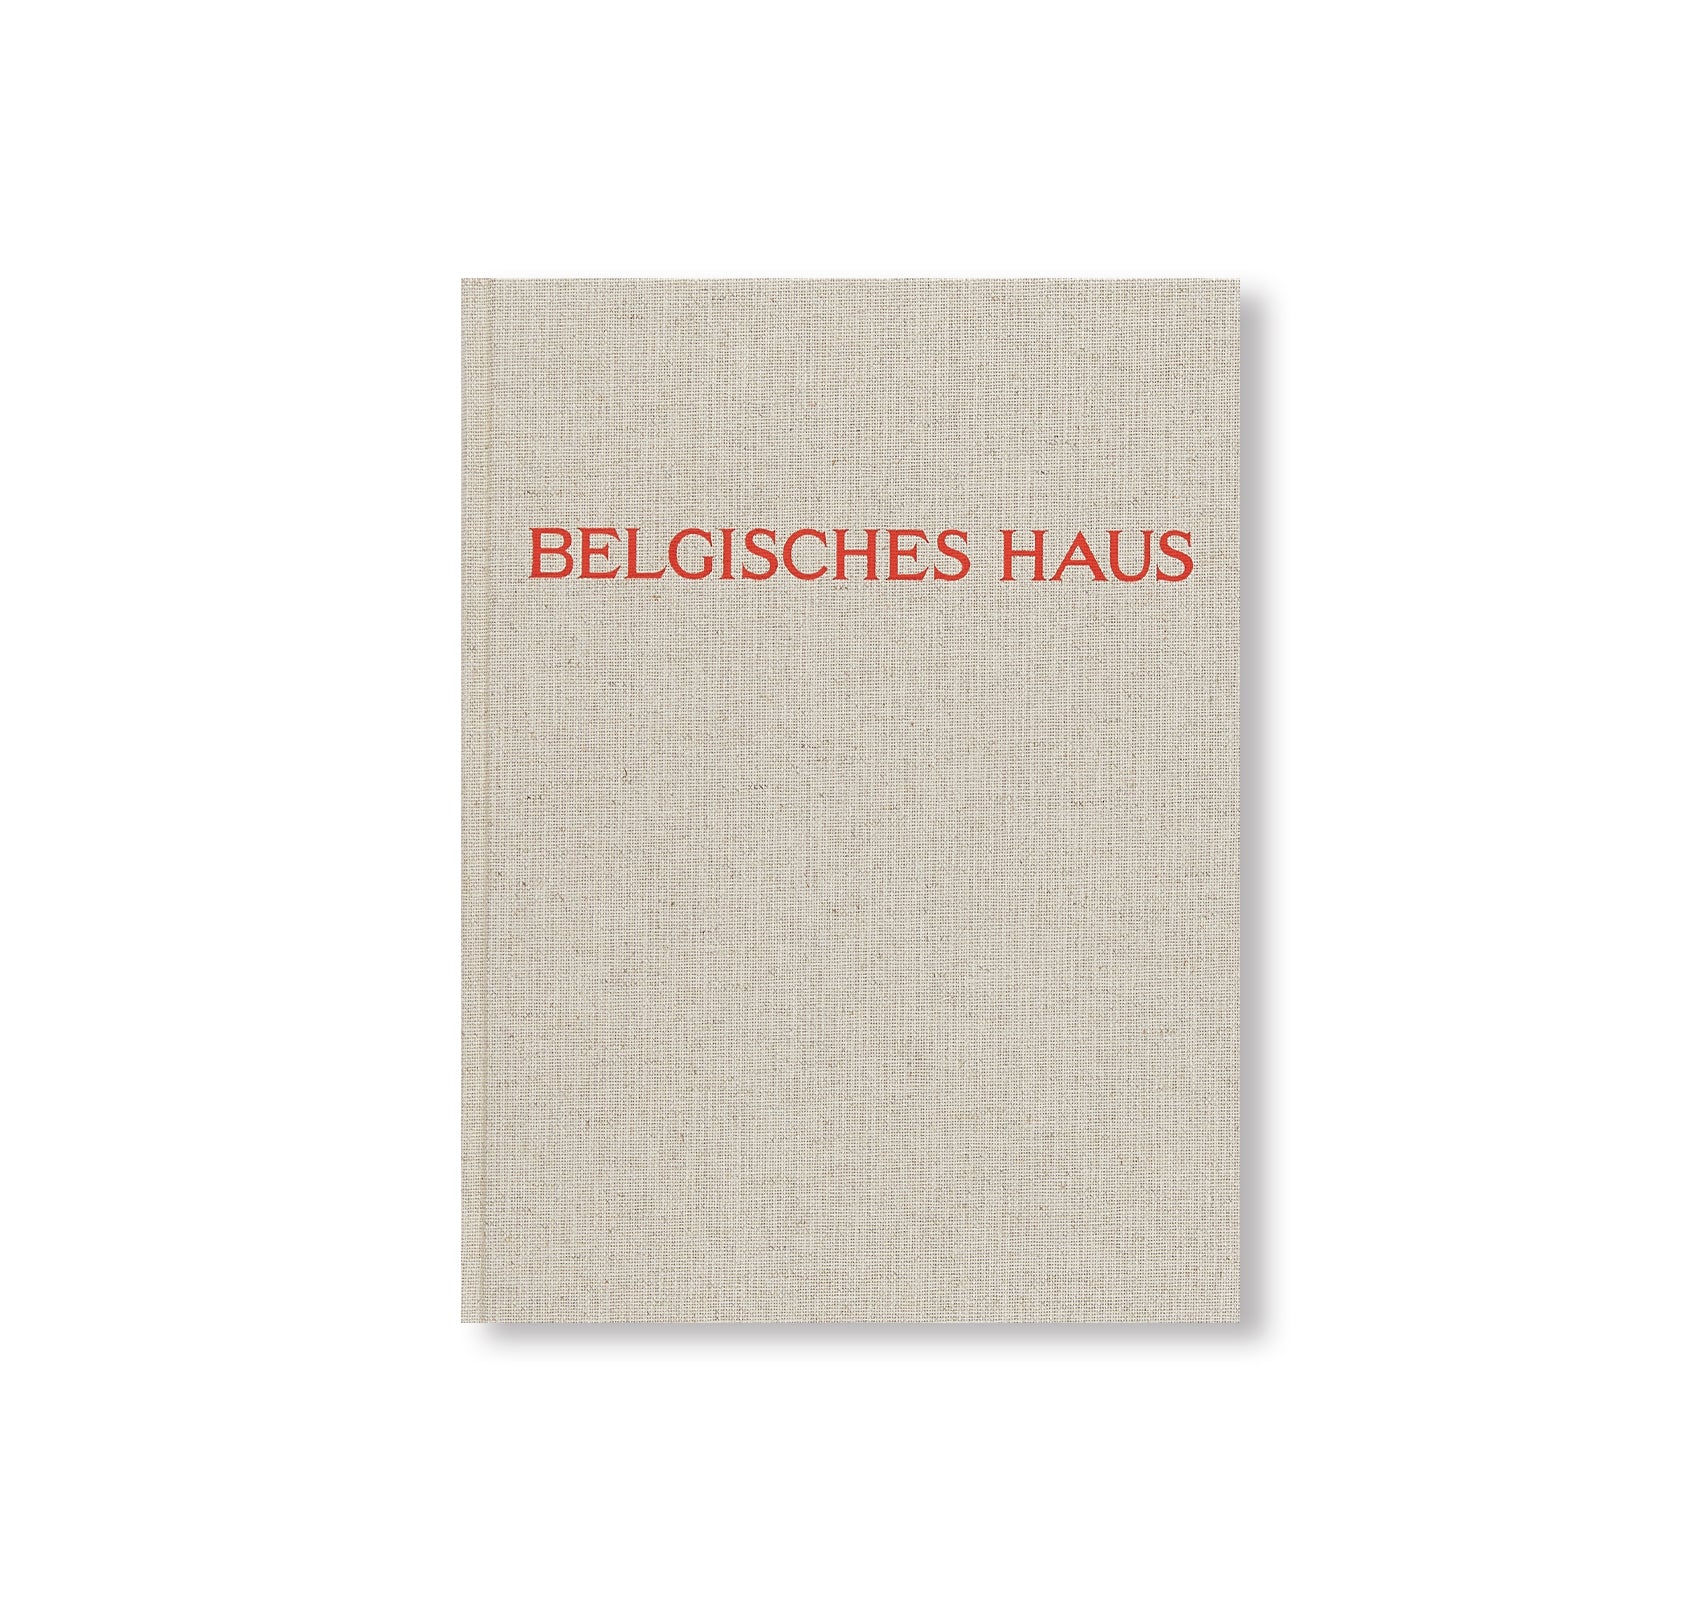 MAISON BELGE: BELGISCHES HUIS by Candida Höfer